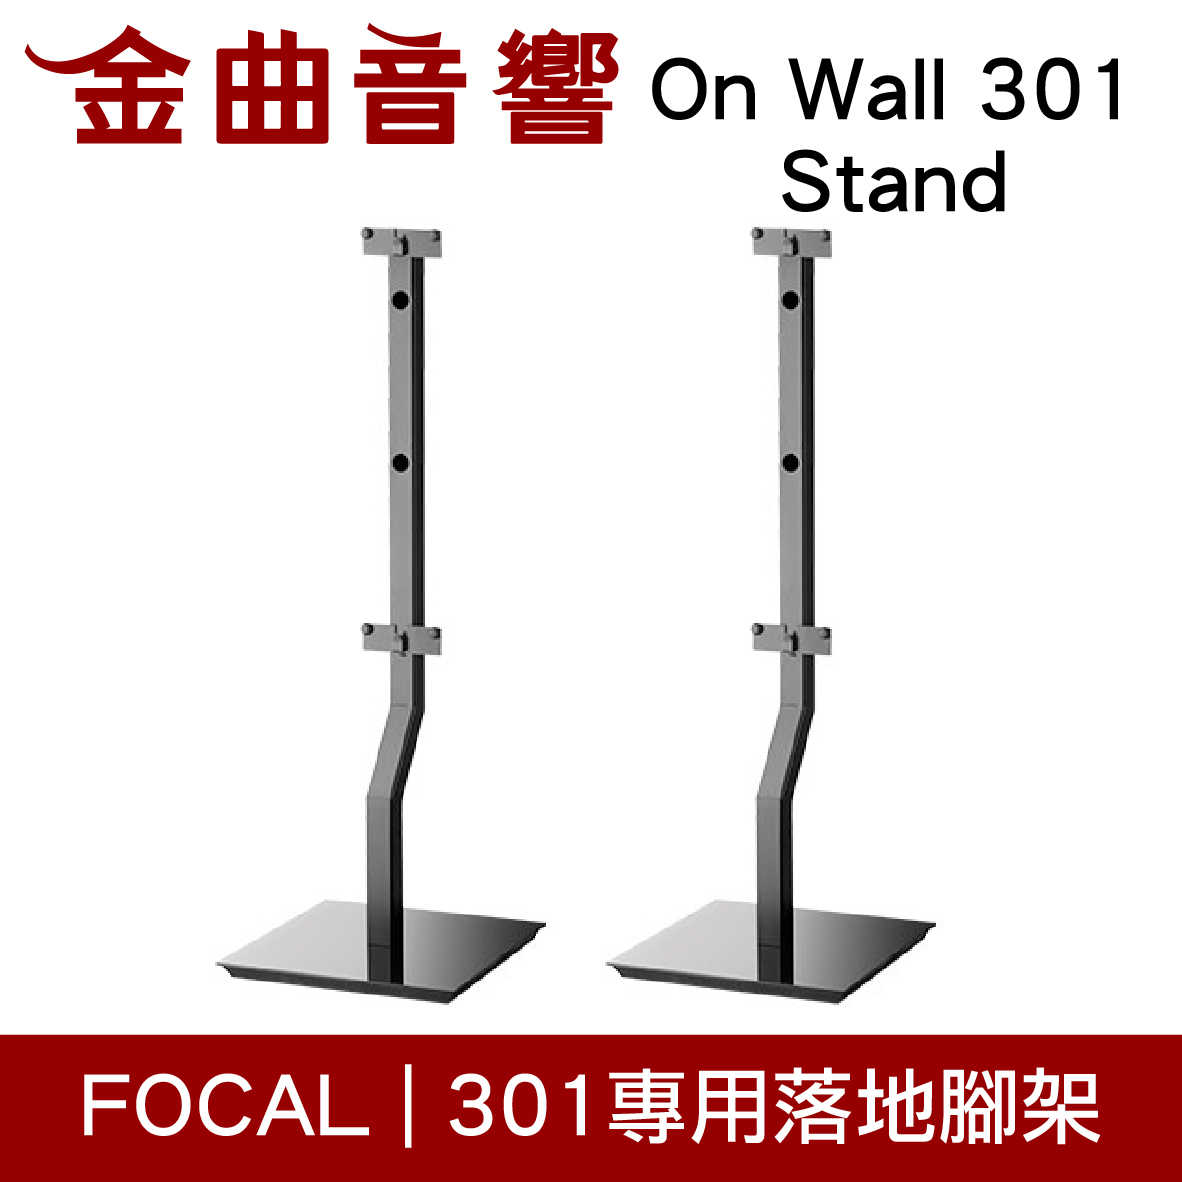 FOCAL On Wall 301 Stand 黑色 專用 支架 落地腳架（一對）| 金曲音響